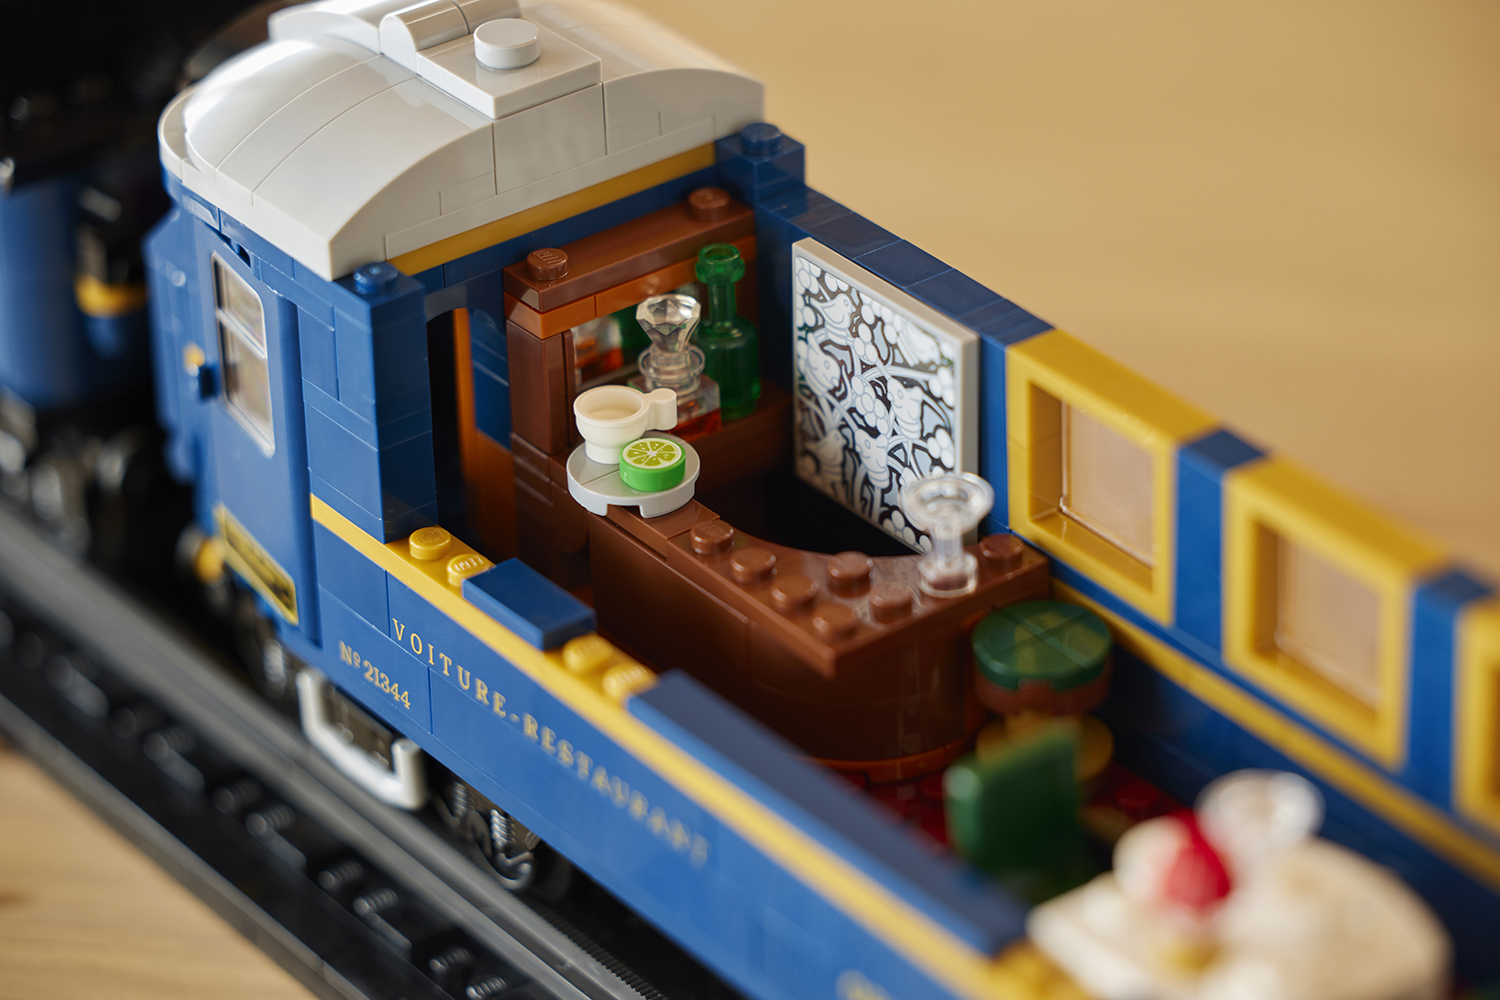 LEGO IDEAS - The Lego Swiss Train